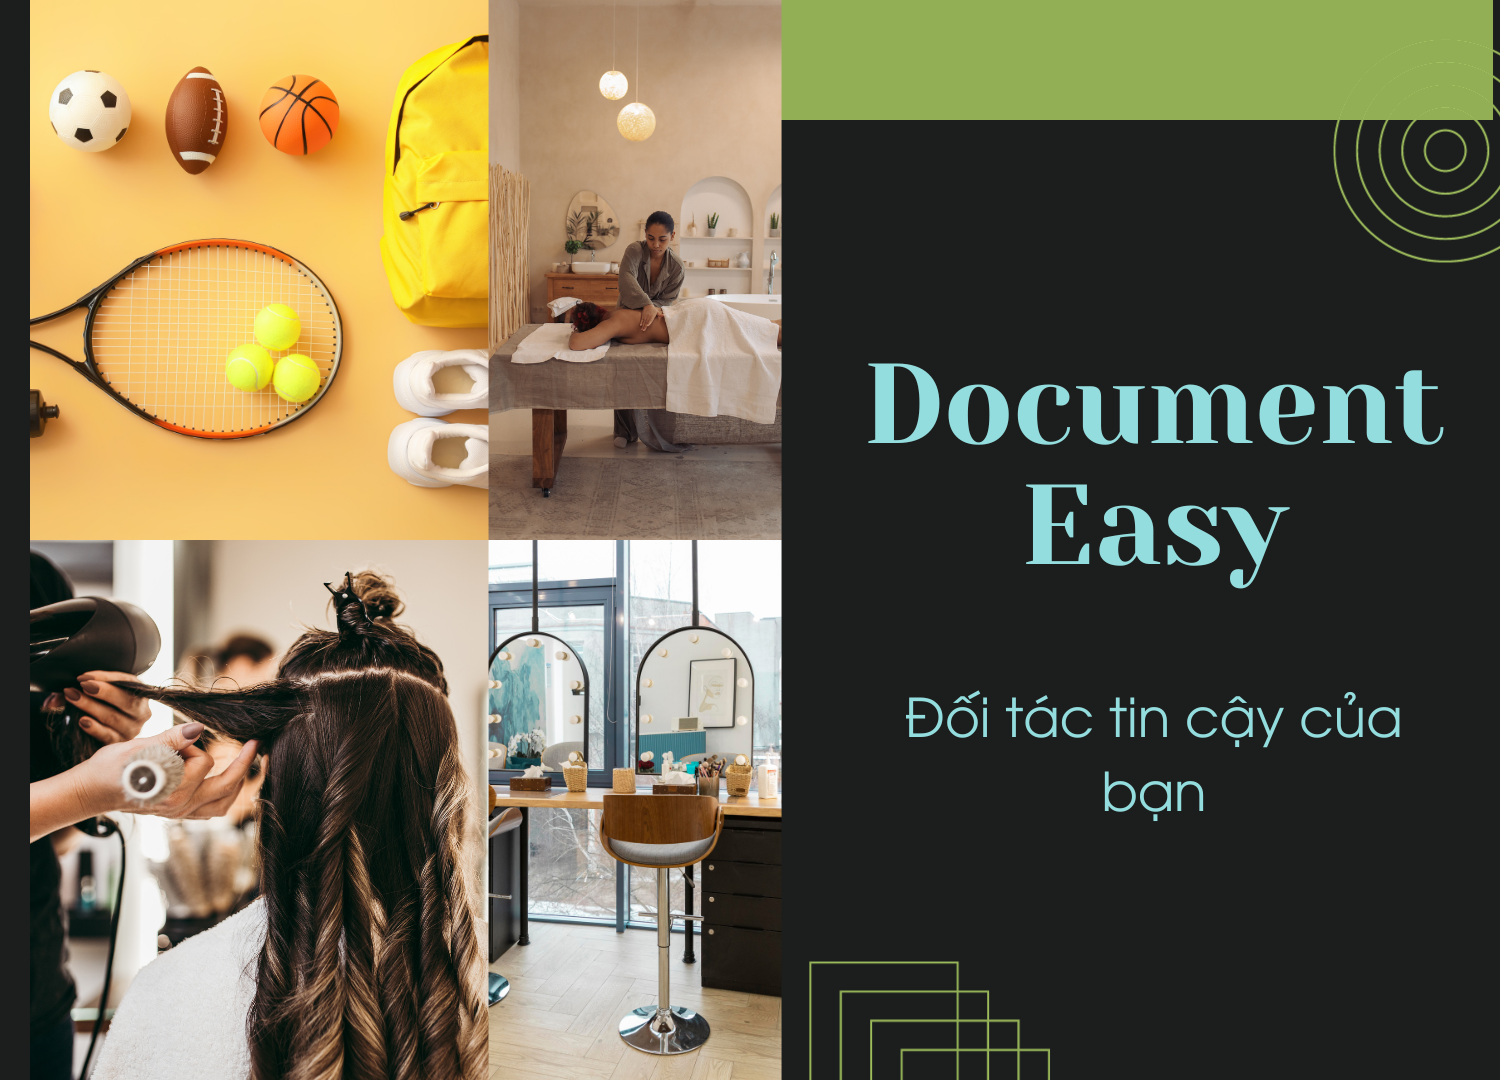 Document easy - đối tác tin cậy